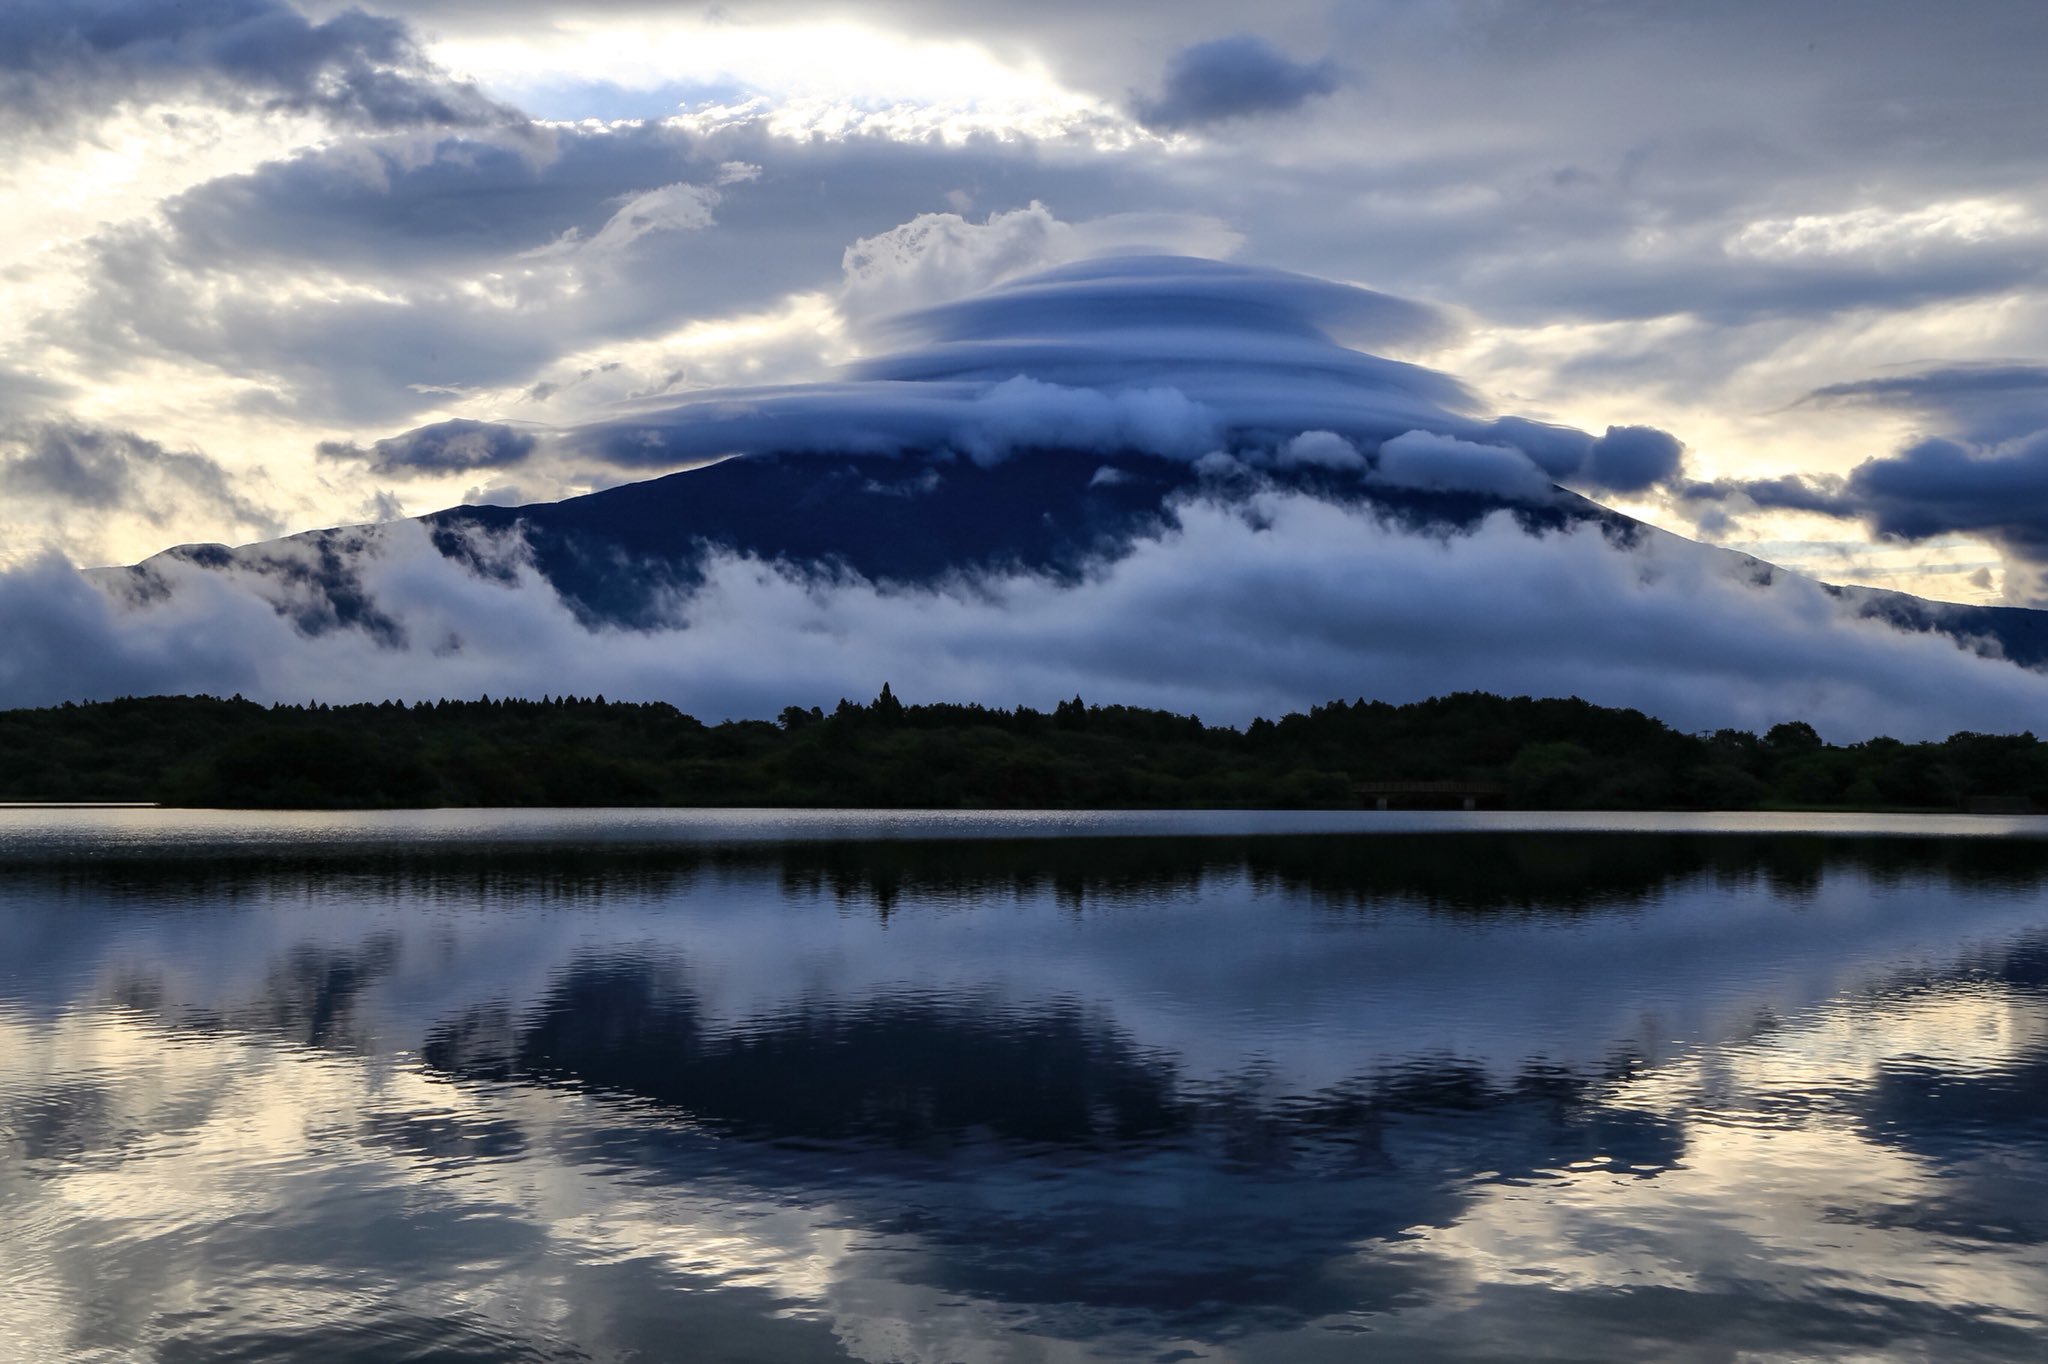 General 2048x1364 Mount Fuji clouds Japan lake reflection